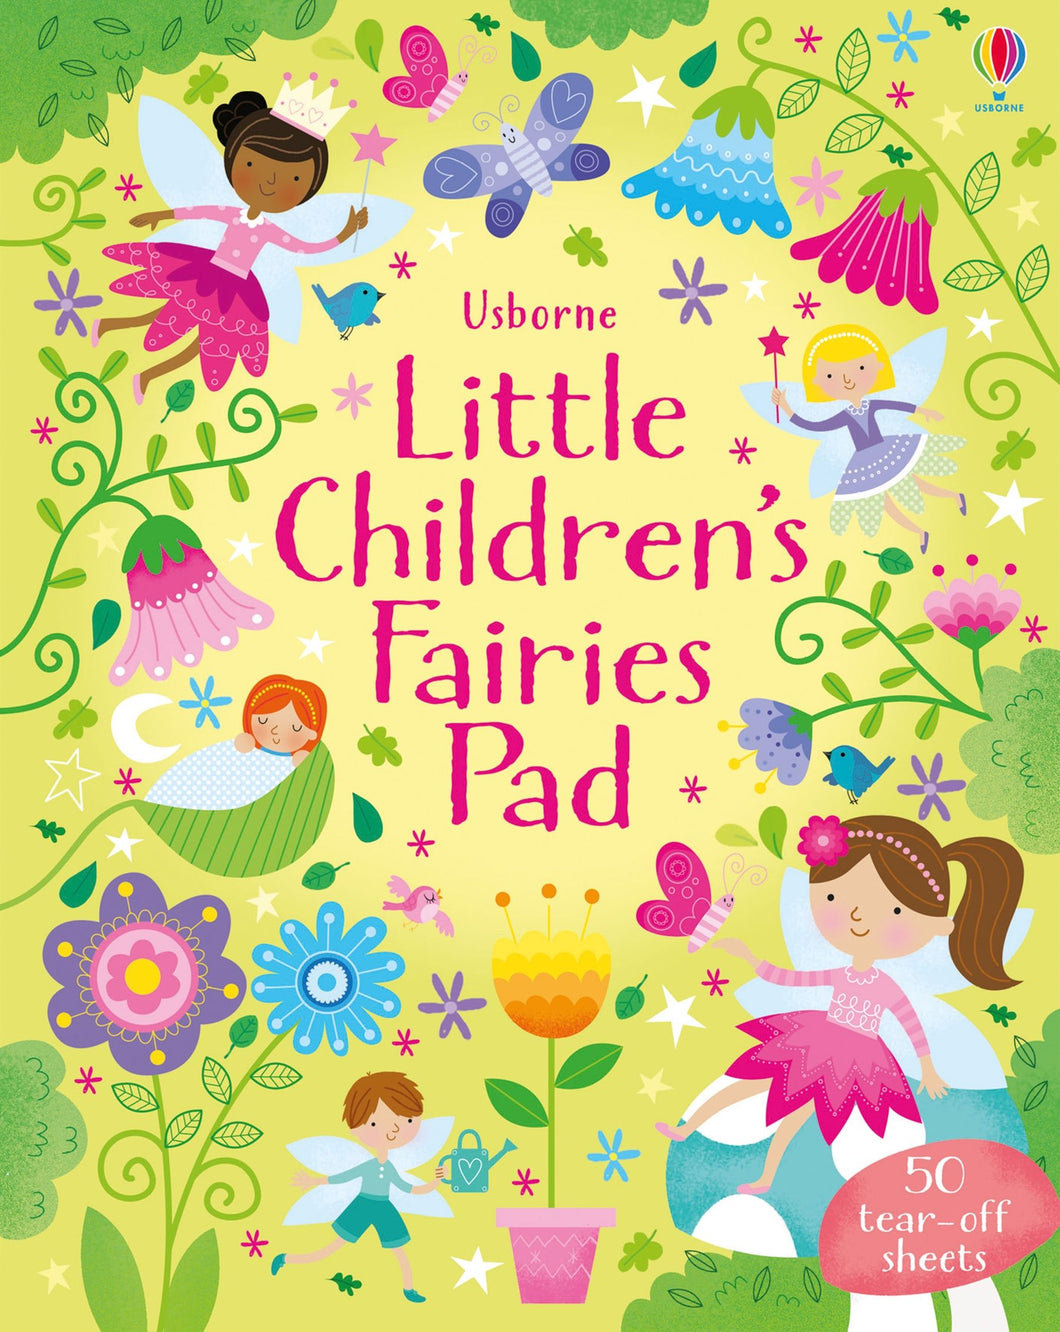 Little Children's Fairies Pad